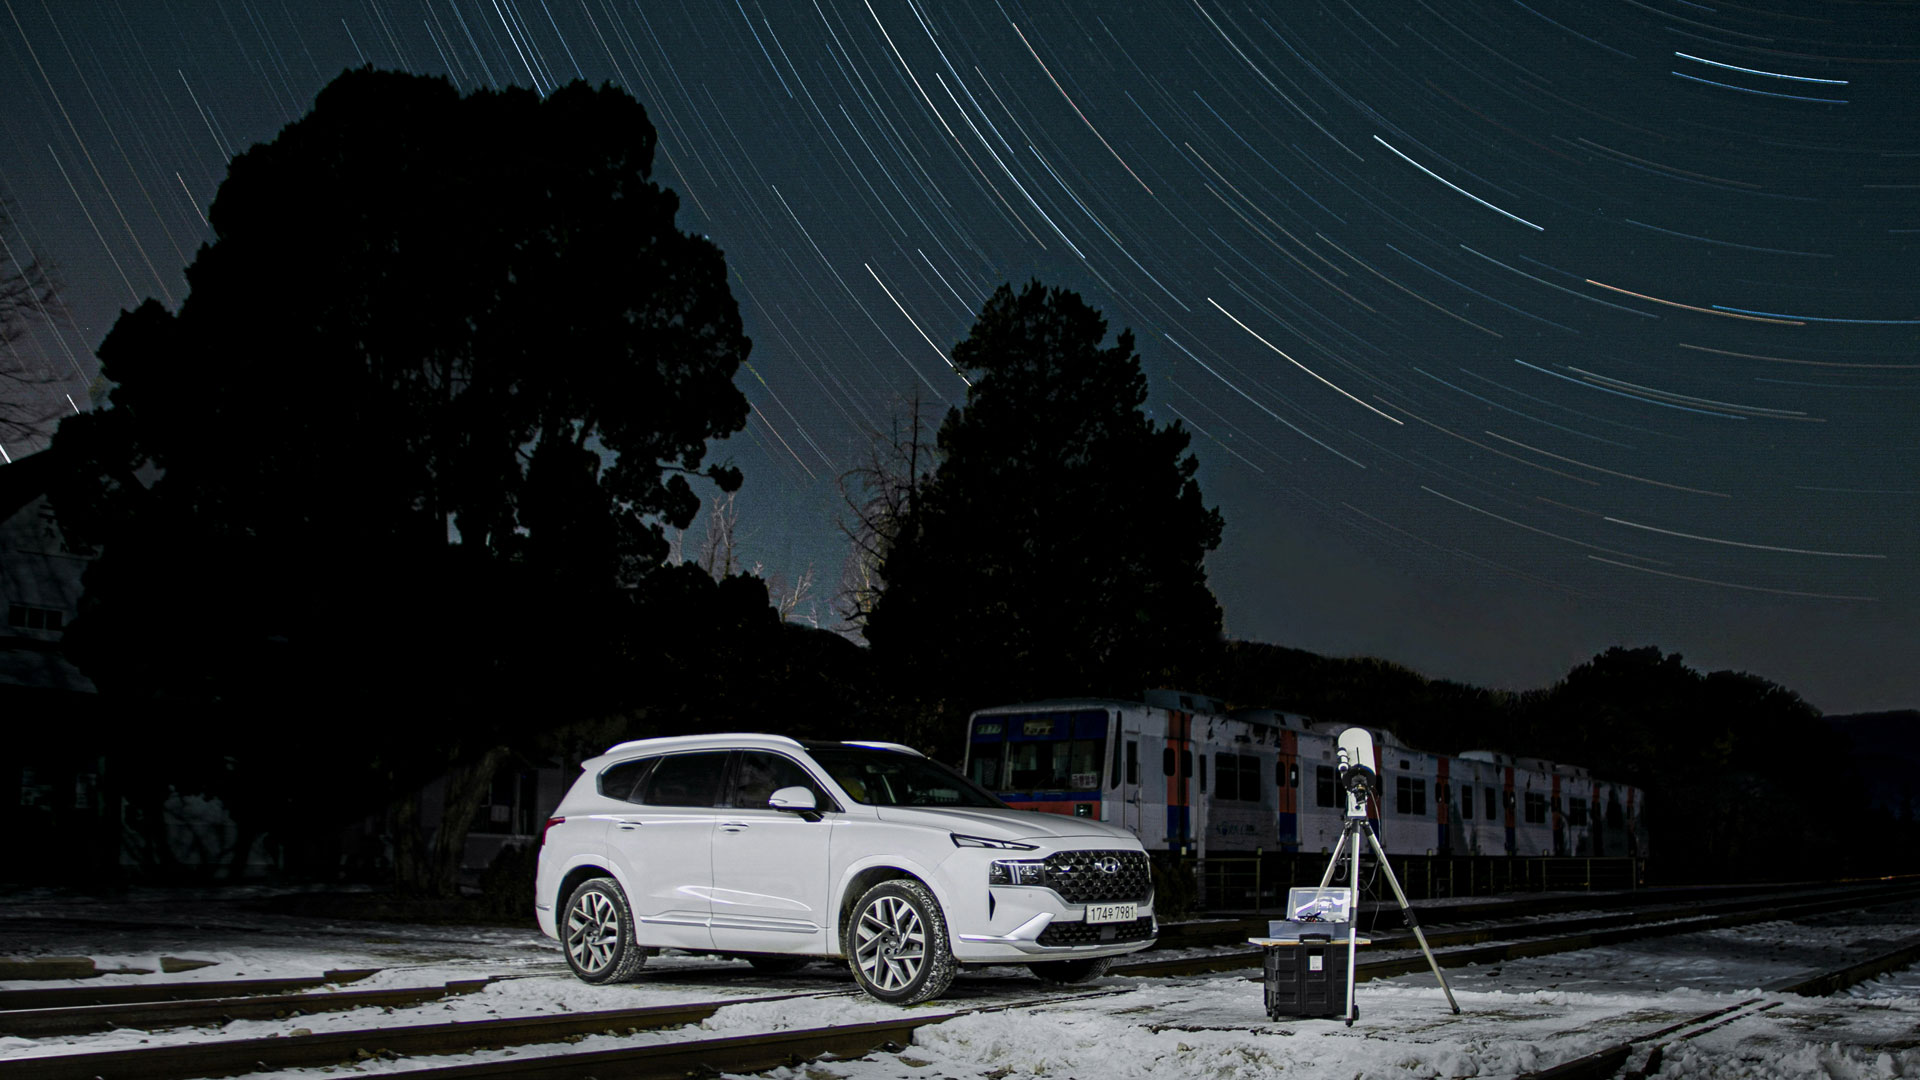 Capturing the Night Sky and stars with Hyundai Santa Fe